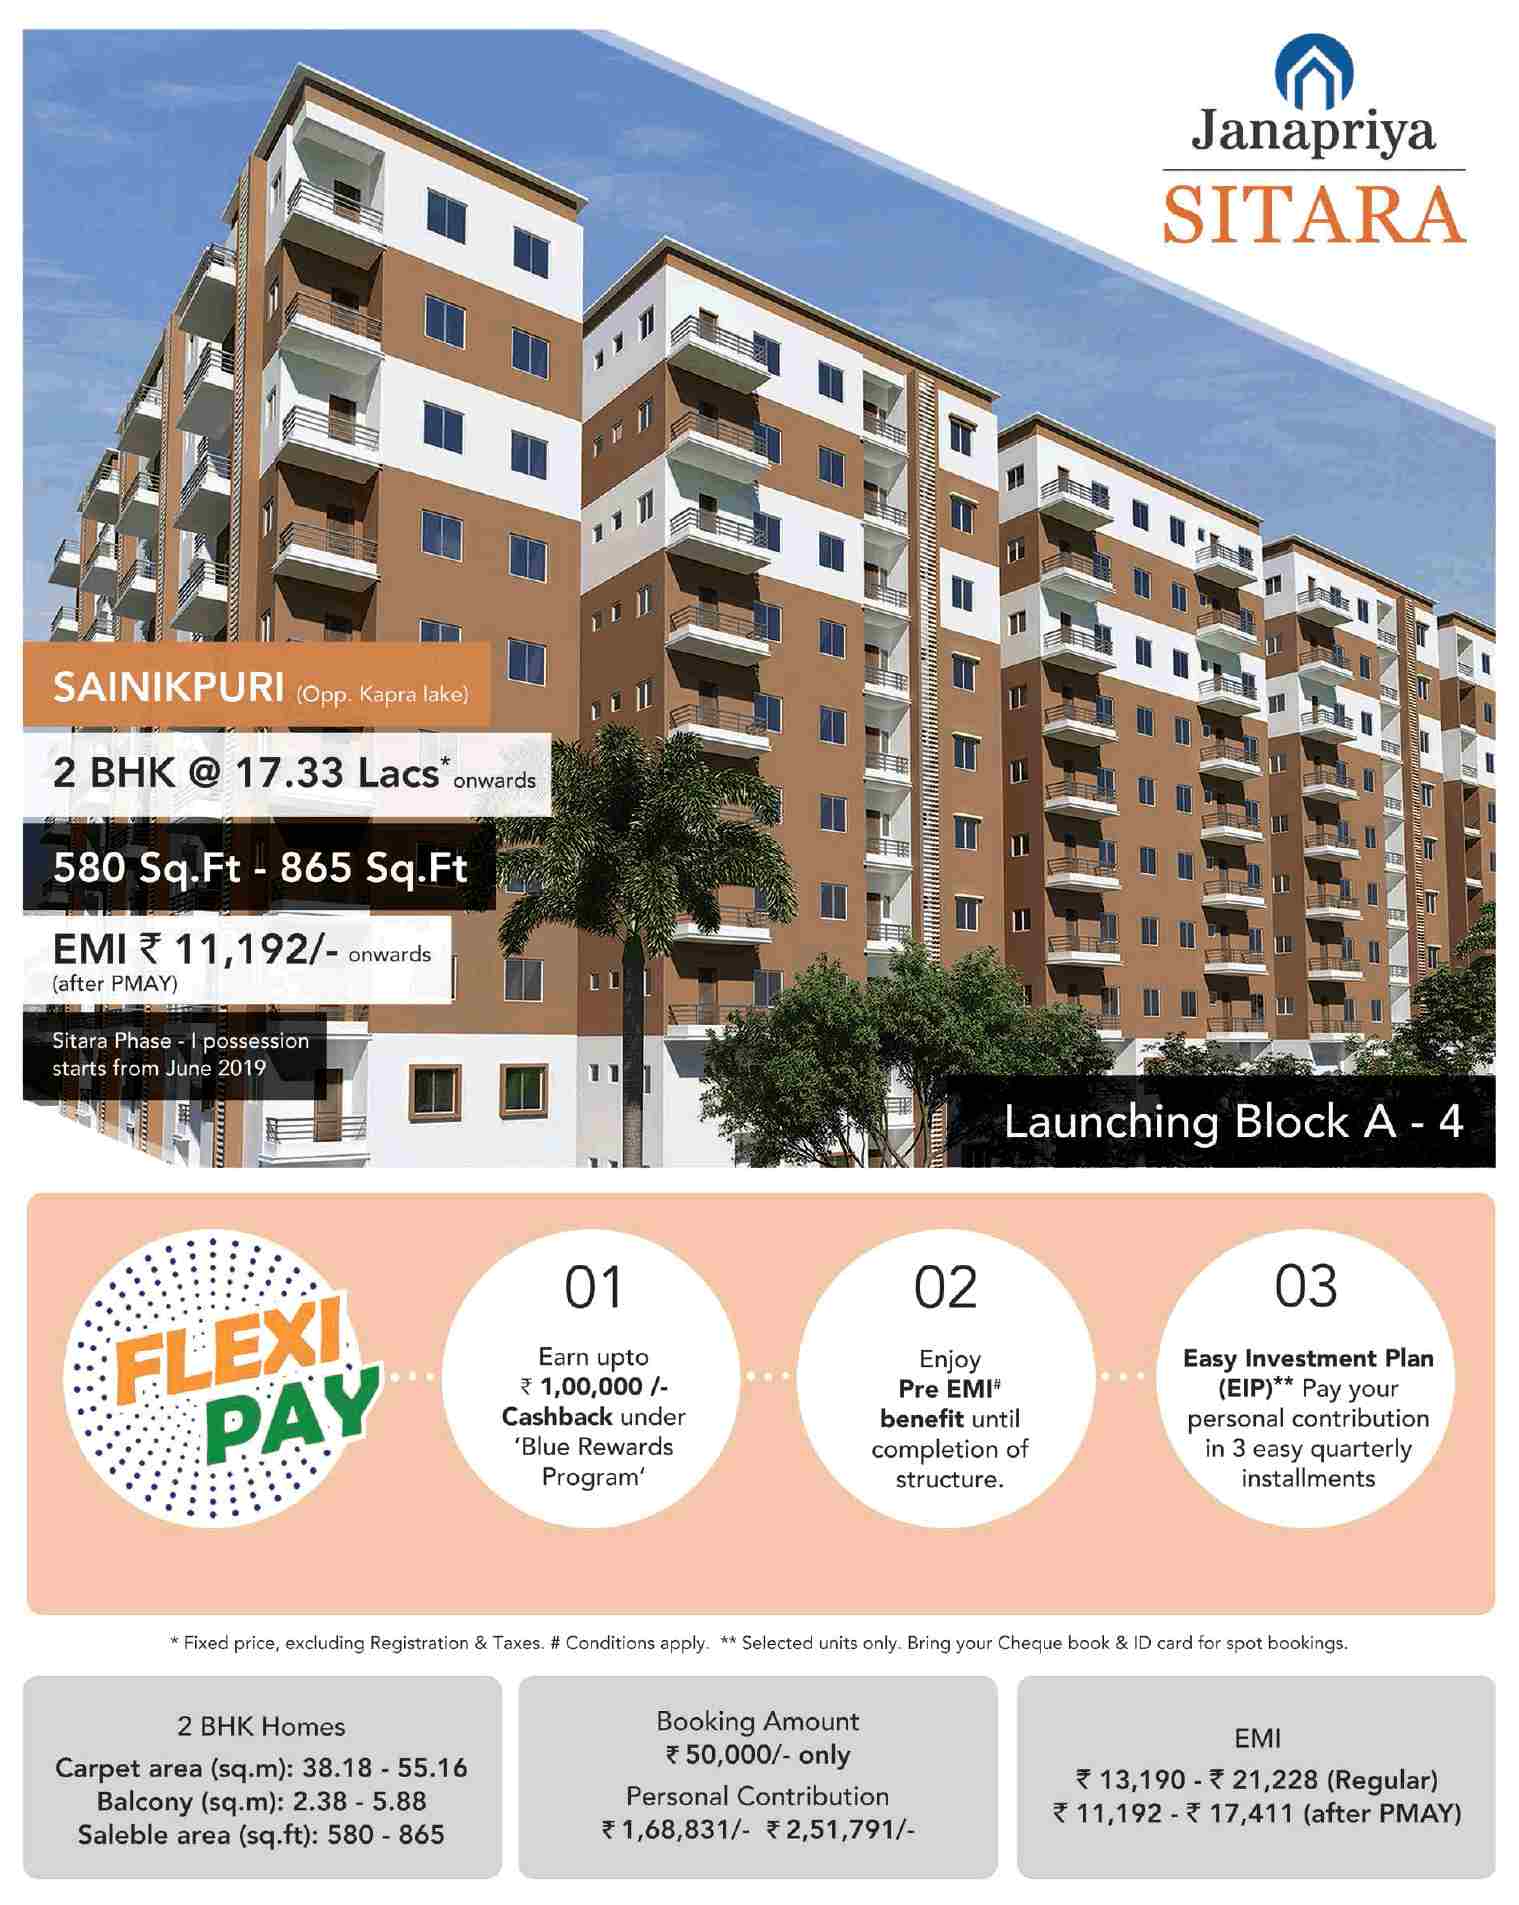 Avail the flexi pay offer at Janapriya Sitara in Sainikpuri, Hyderabad Update